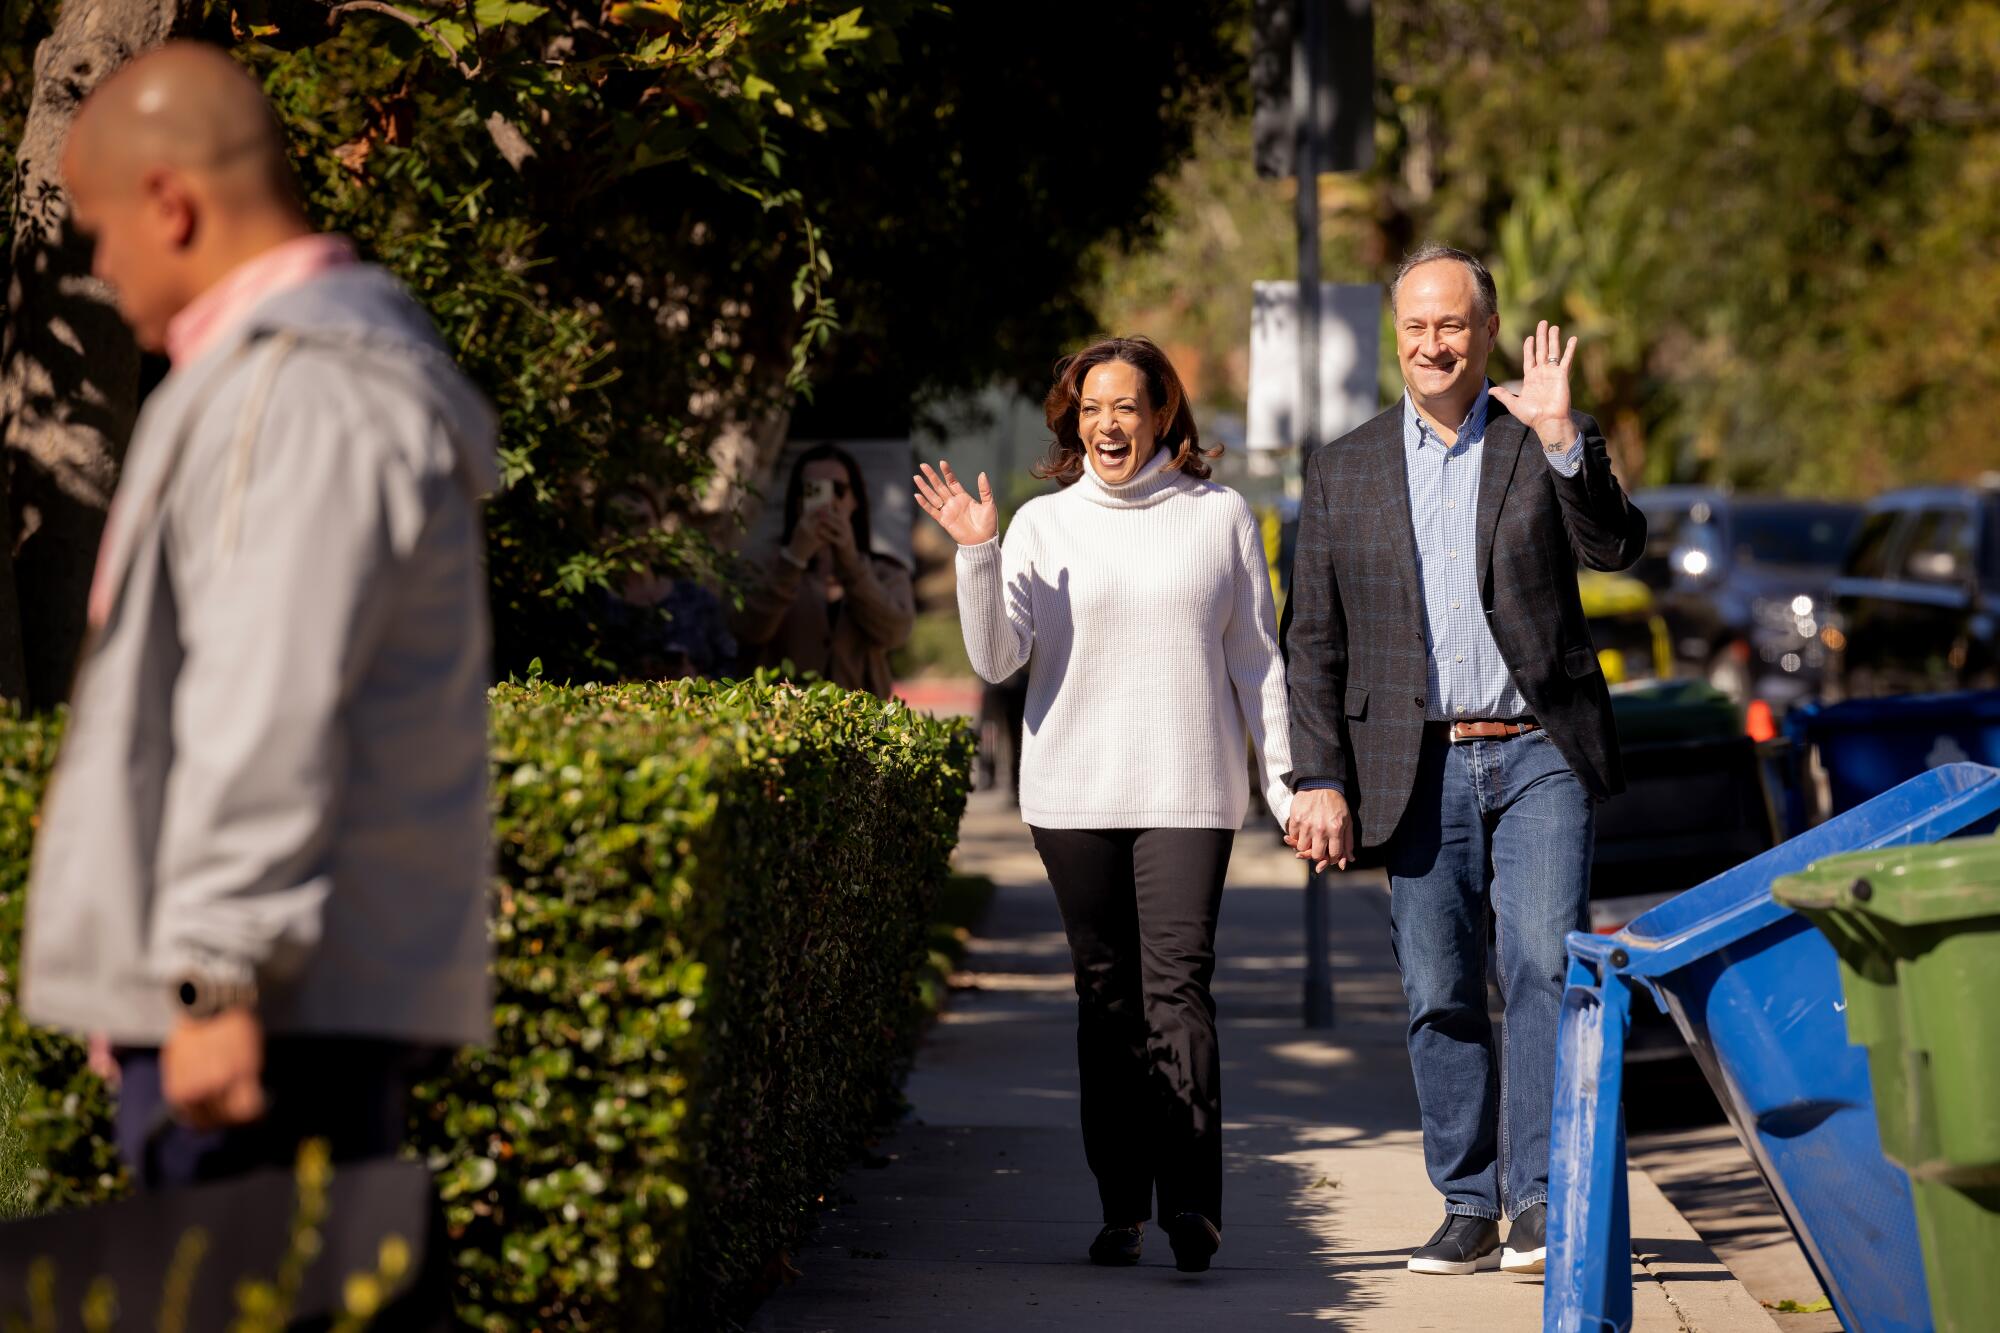 Vice President Kamala Harris and Second Gentleman Doug Emhoff wave and walk down a sidewalk.